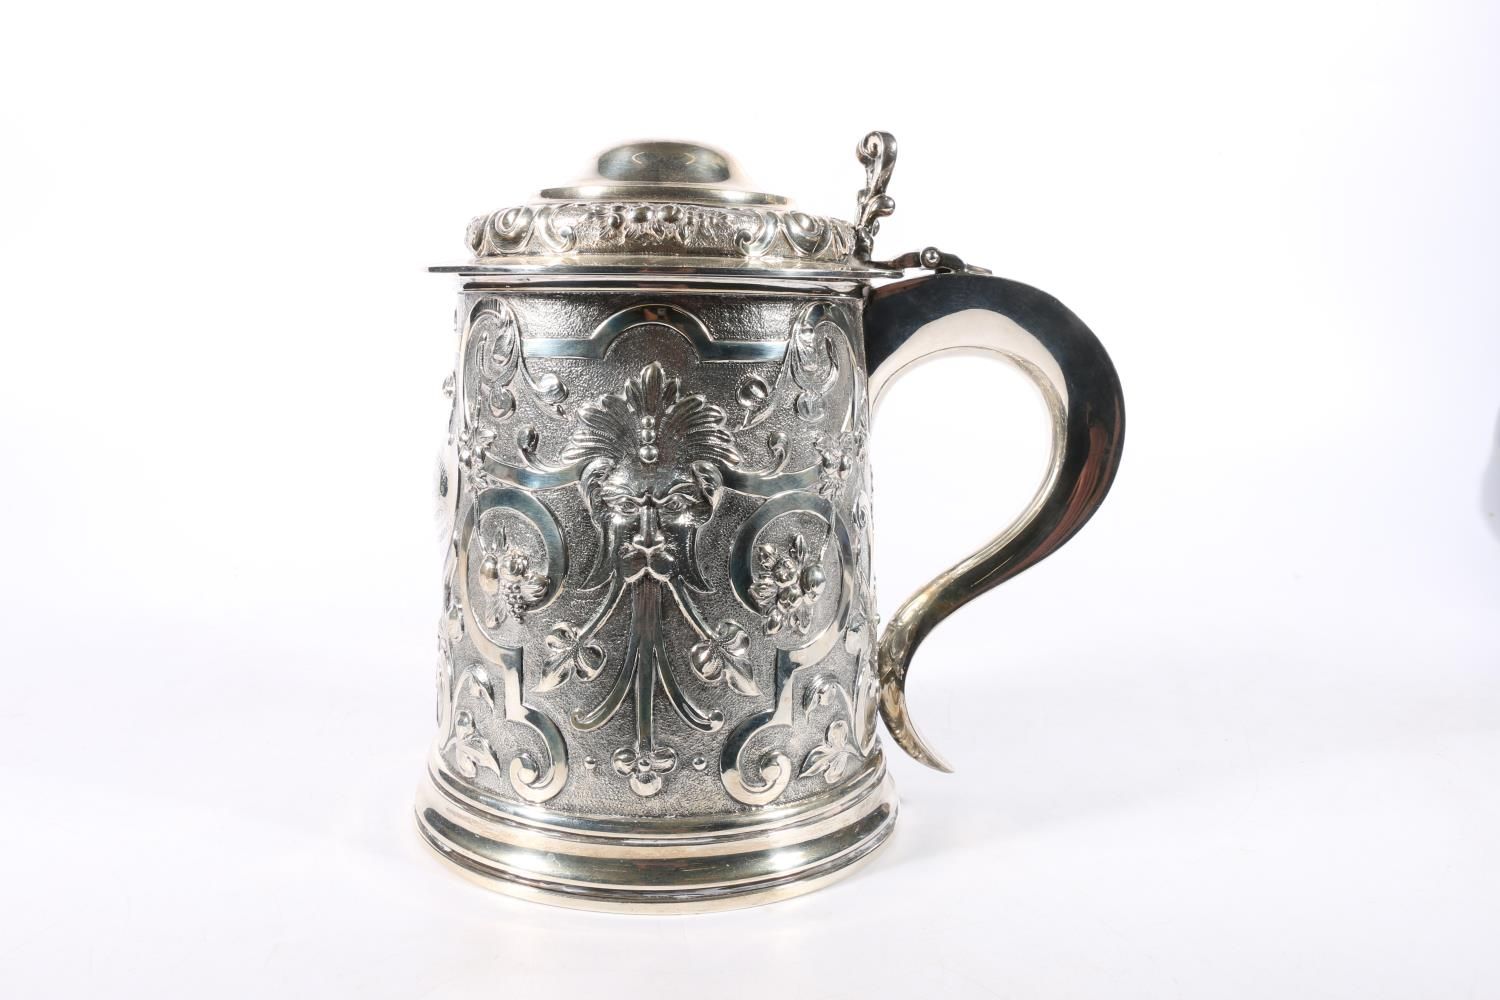 EDINBURGH: The Antique Auction of Silver, Jewellery, Paintings, Oriental & Asian, Porcelain, Furniture, Clocks, etc.